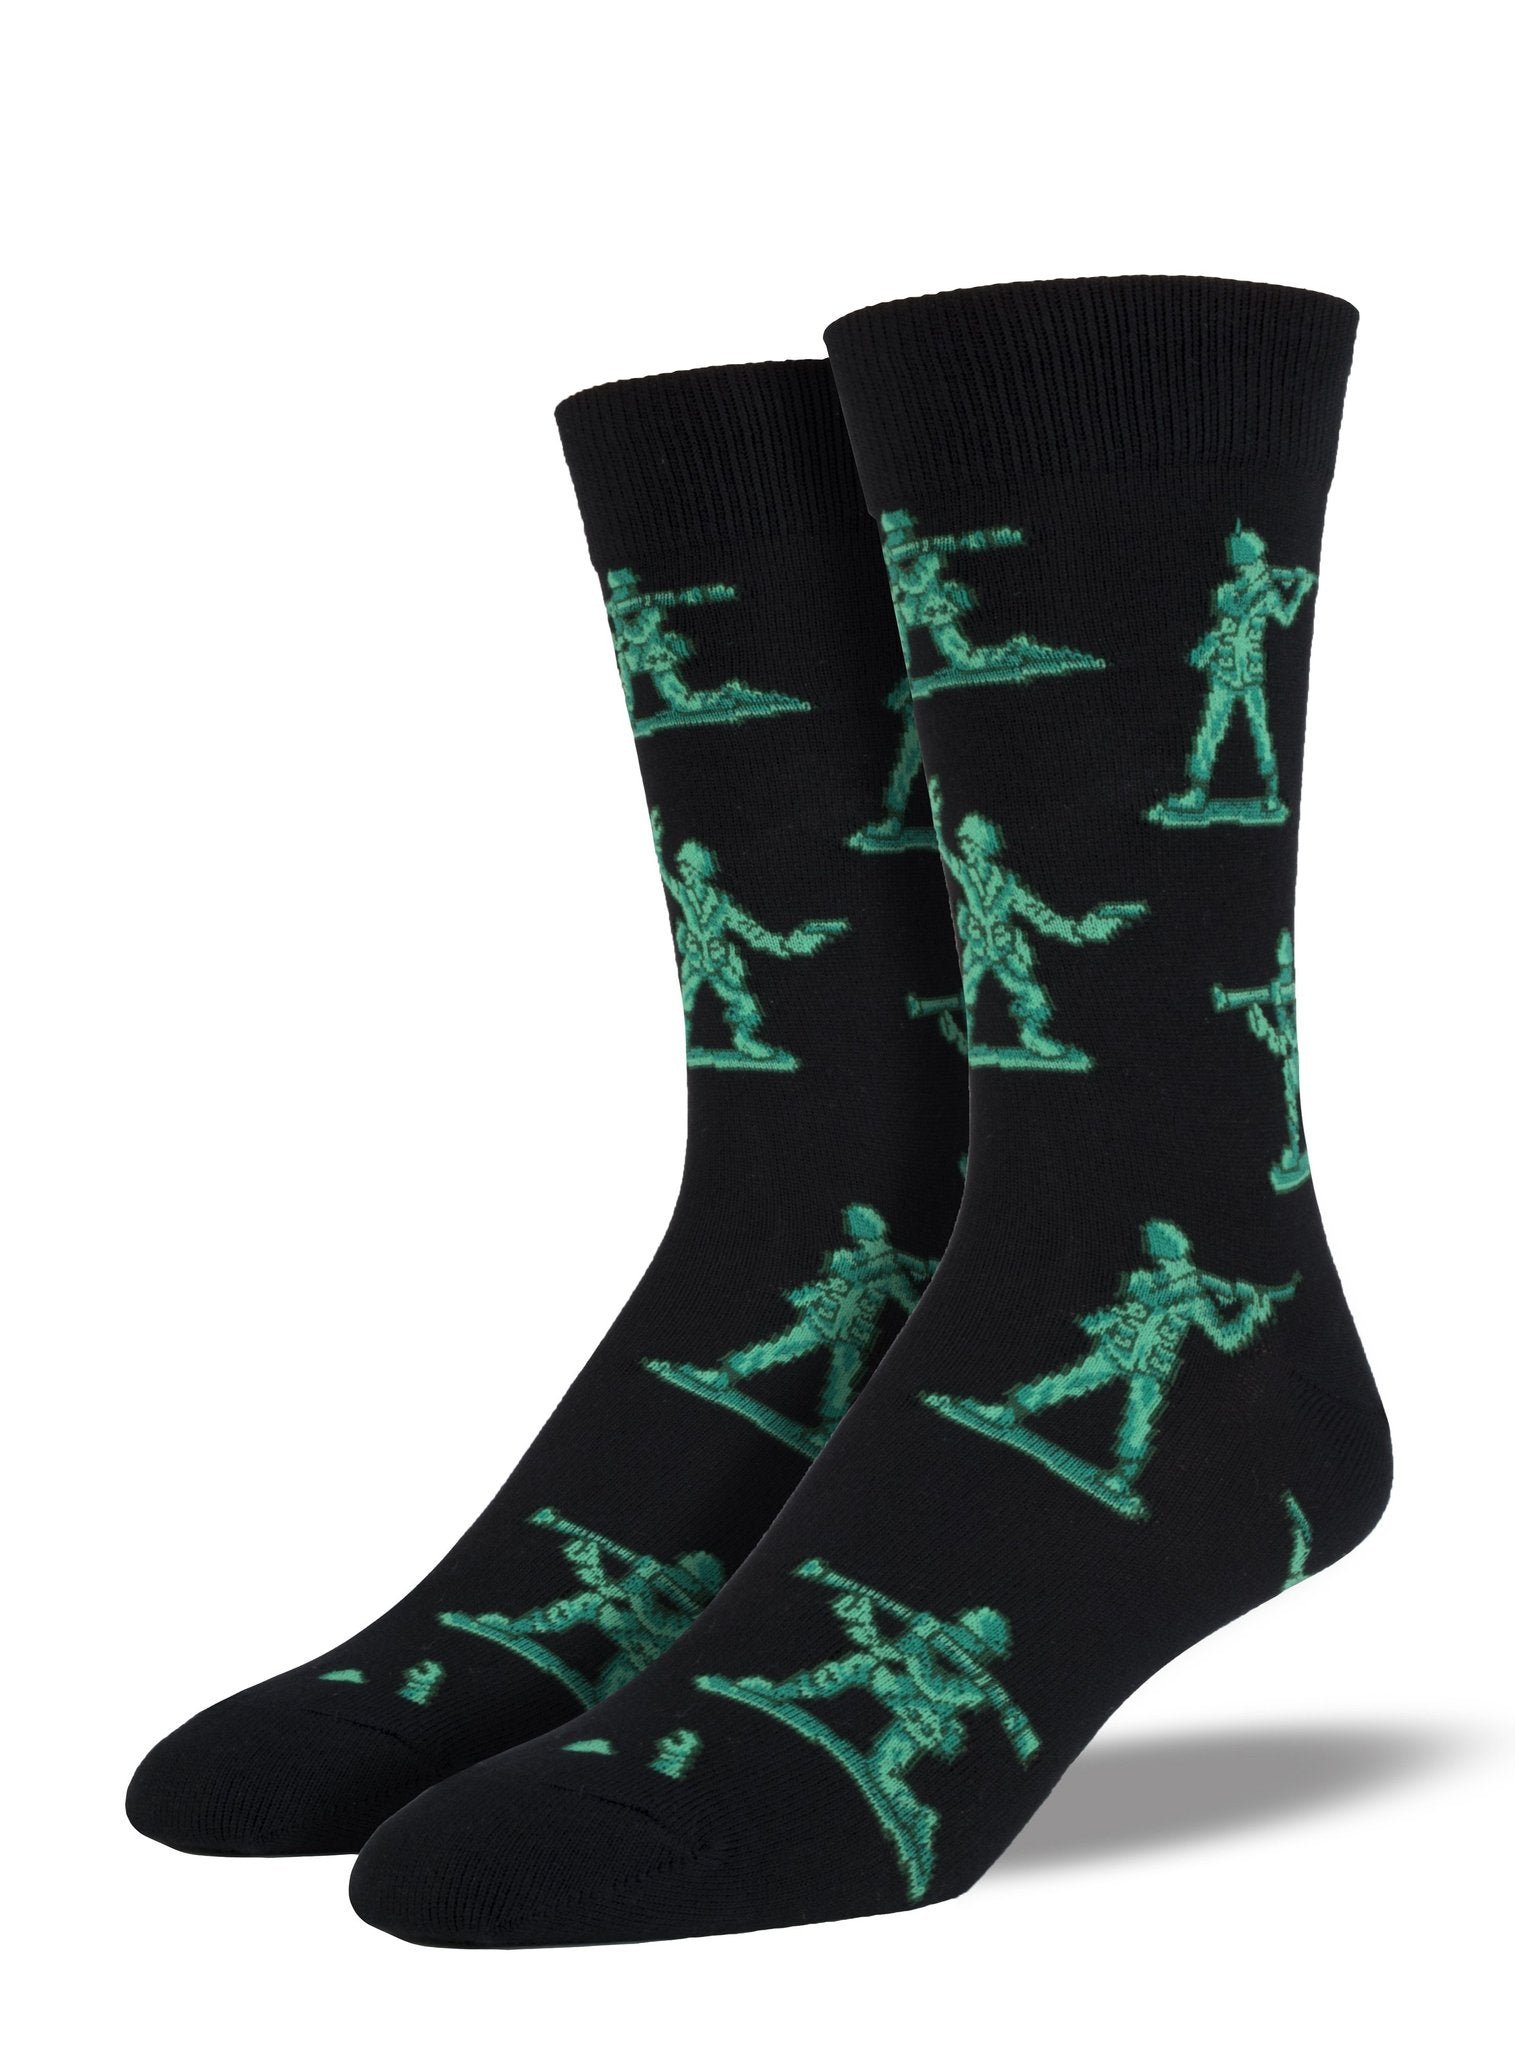 Army men socks